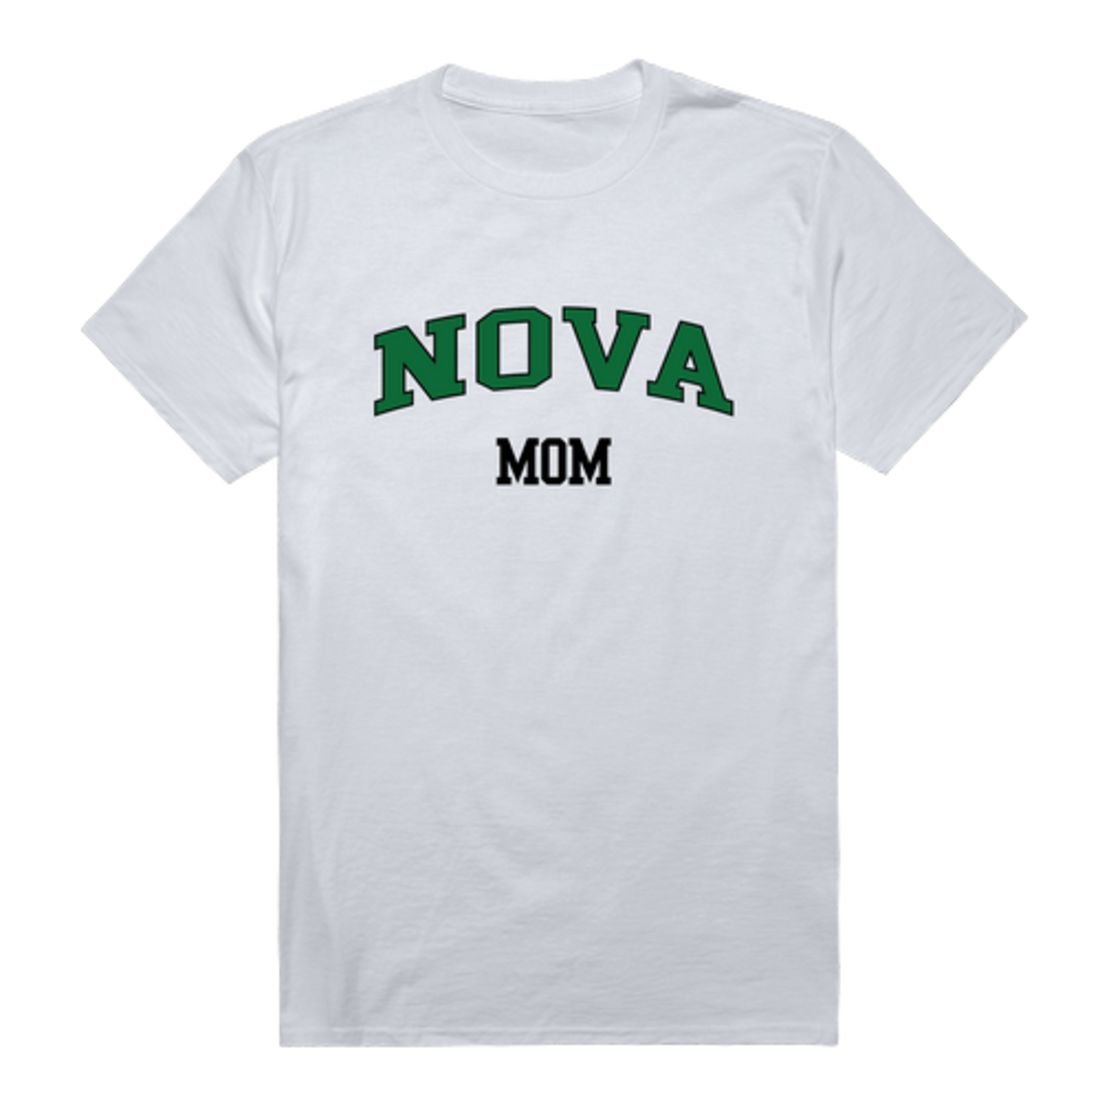 Northern Virginia Community College Nighthawks Mom T-Shirt